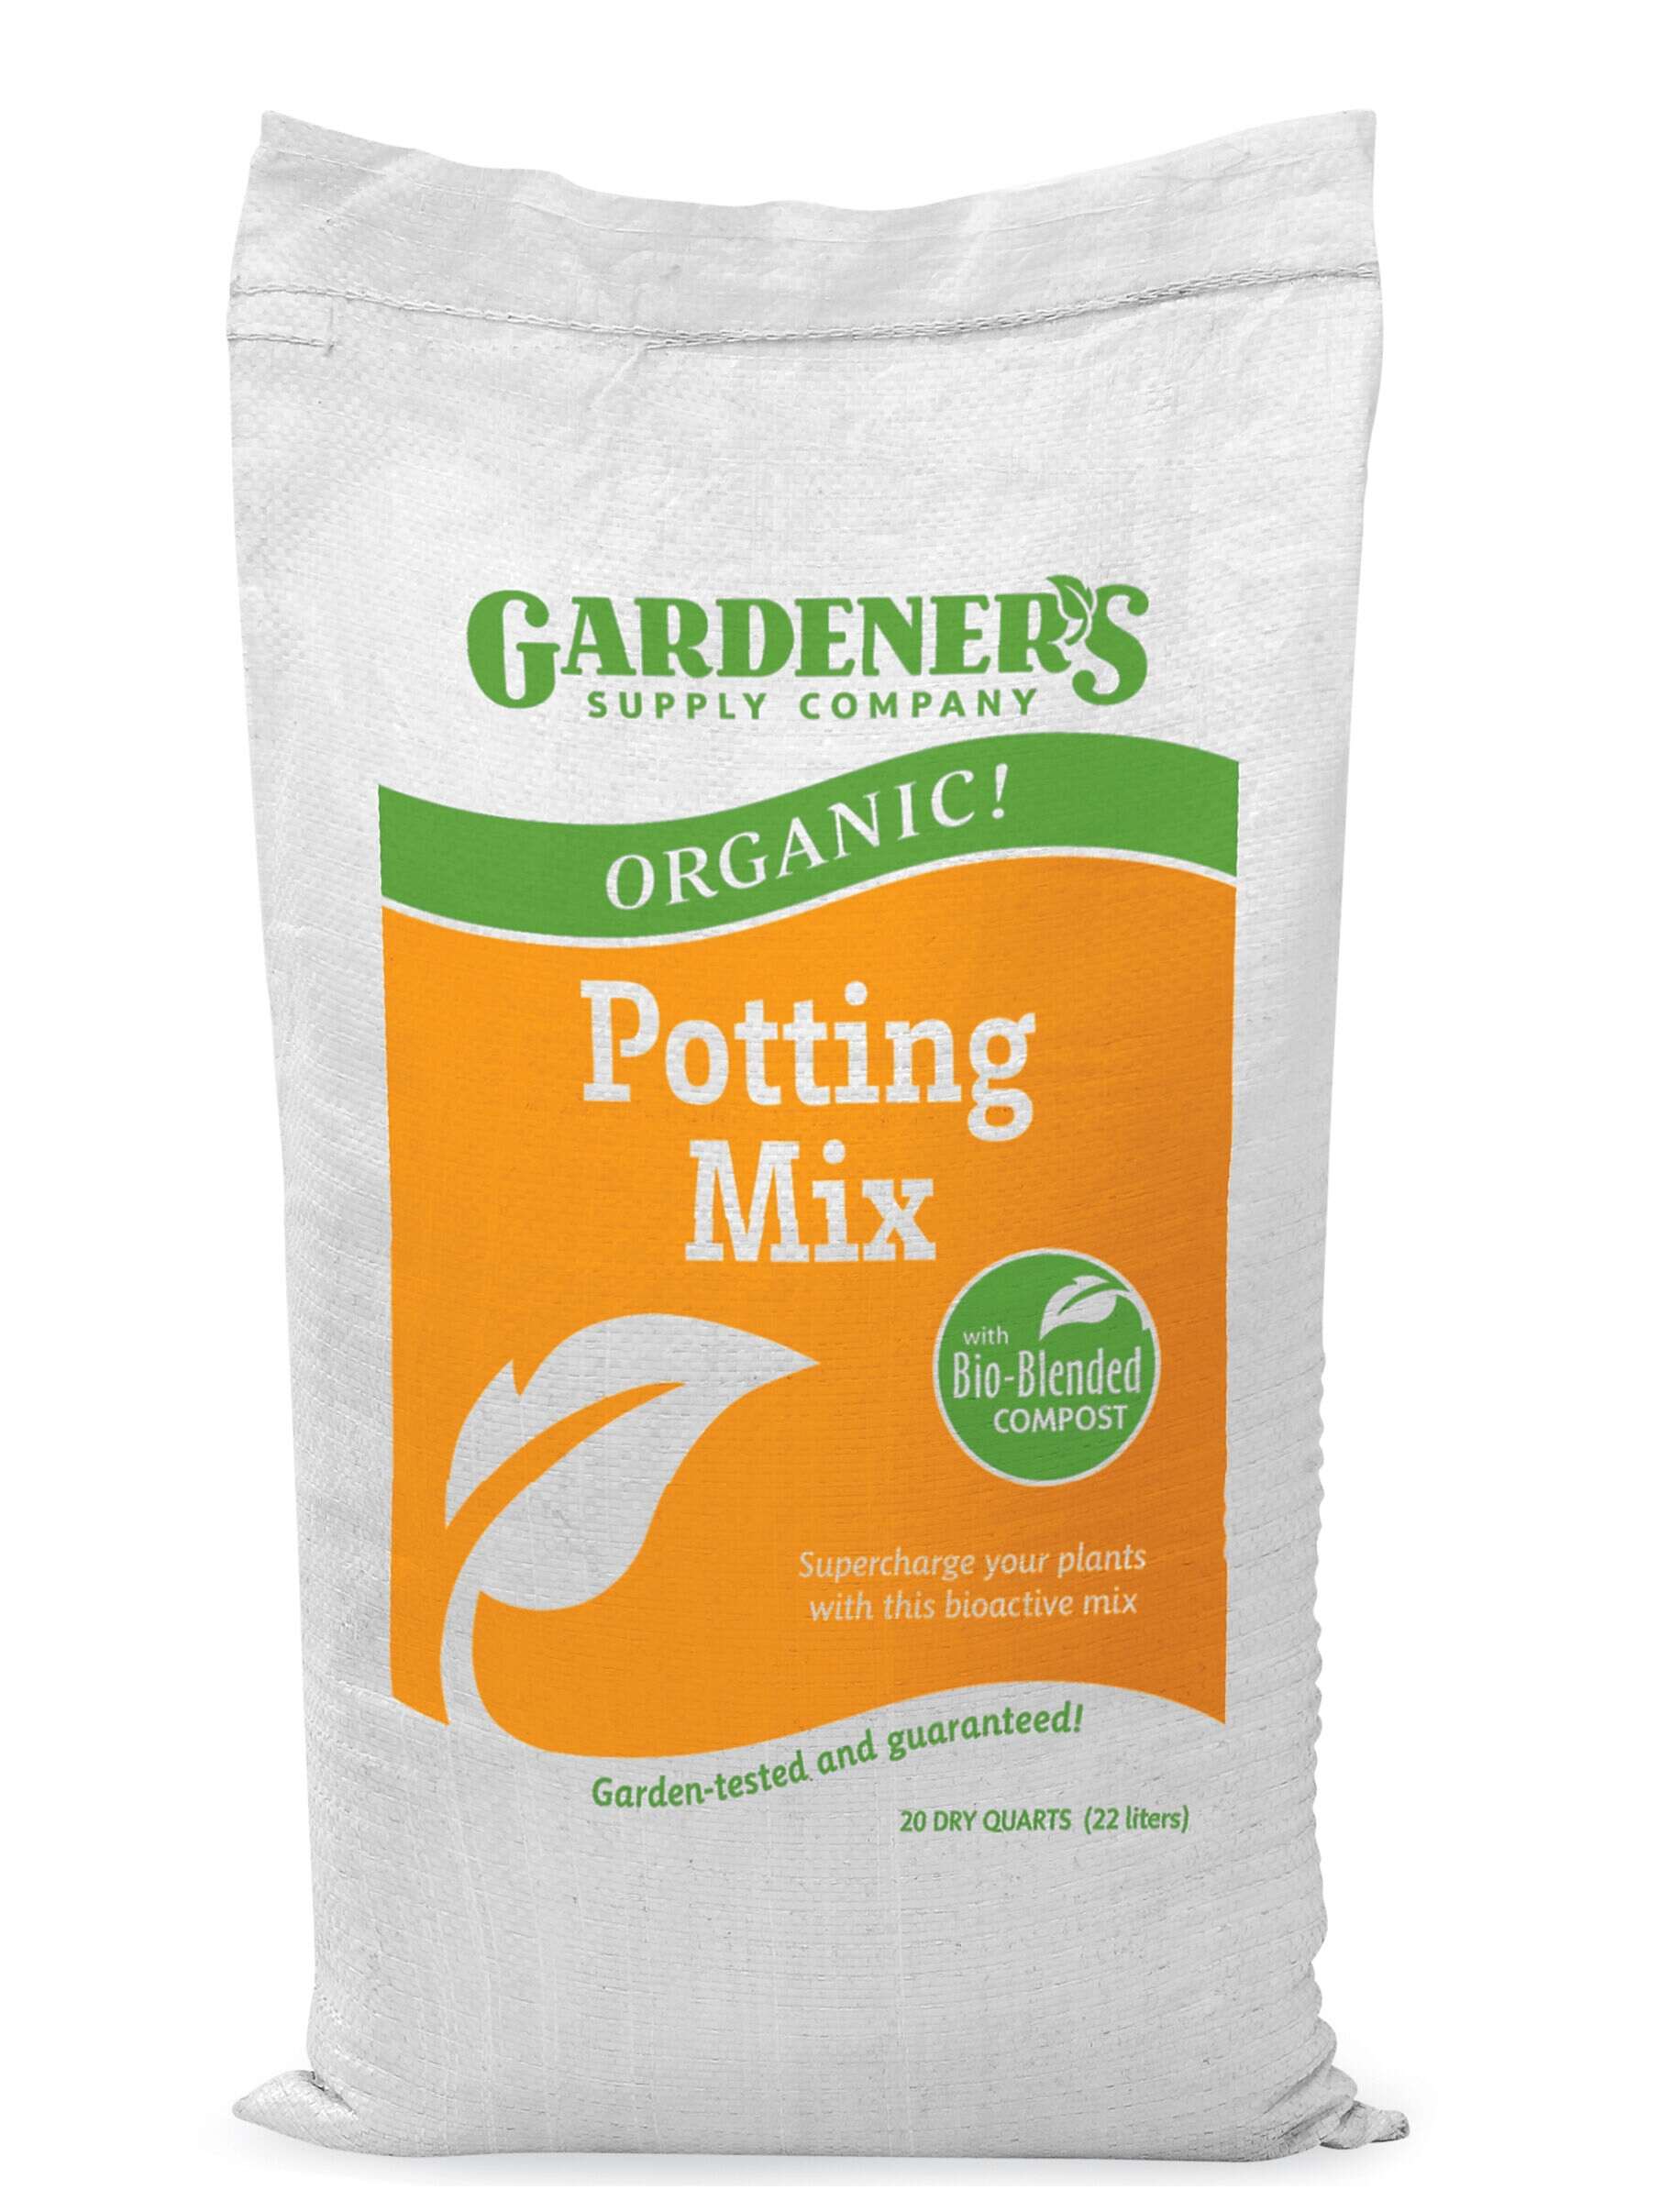 Organic Potting Mix, 20 Qts.